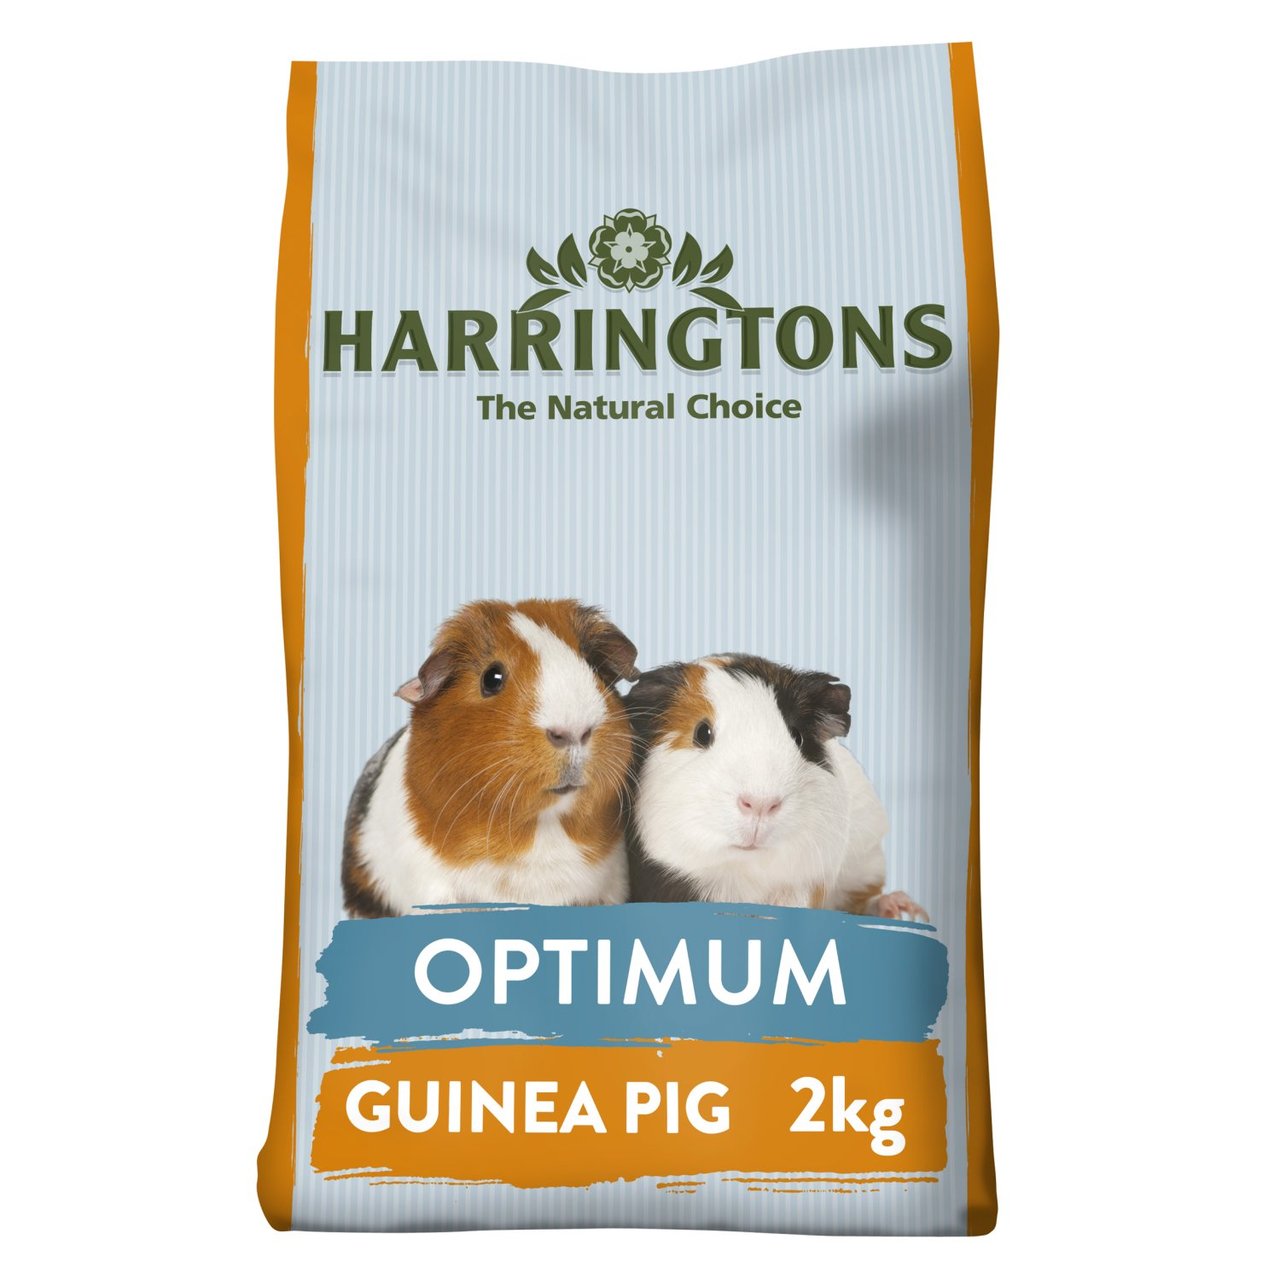 An image of Harringtons Optimum Guinea Pig